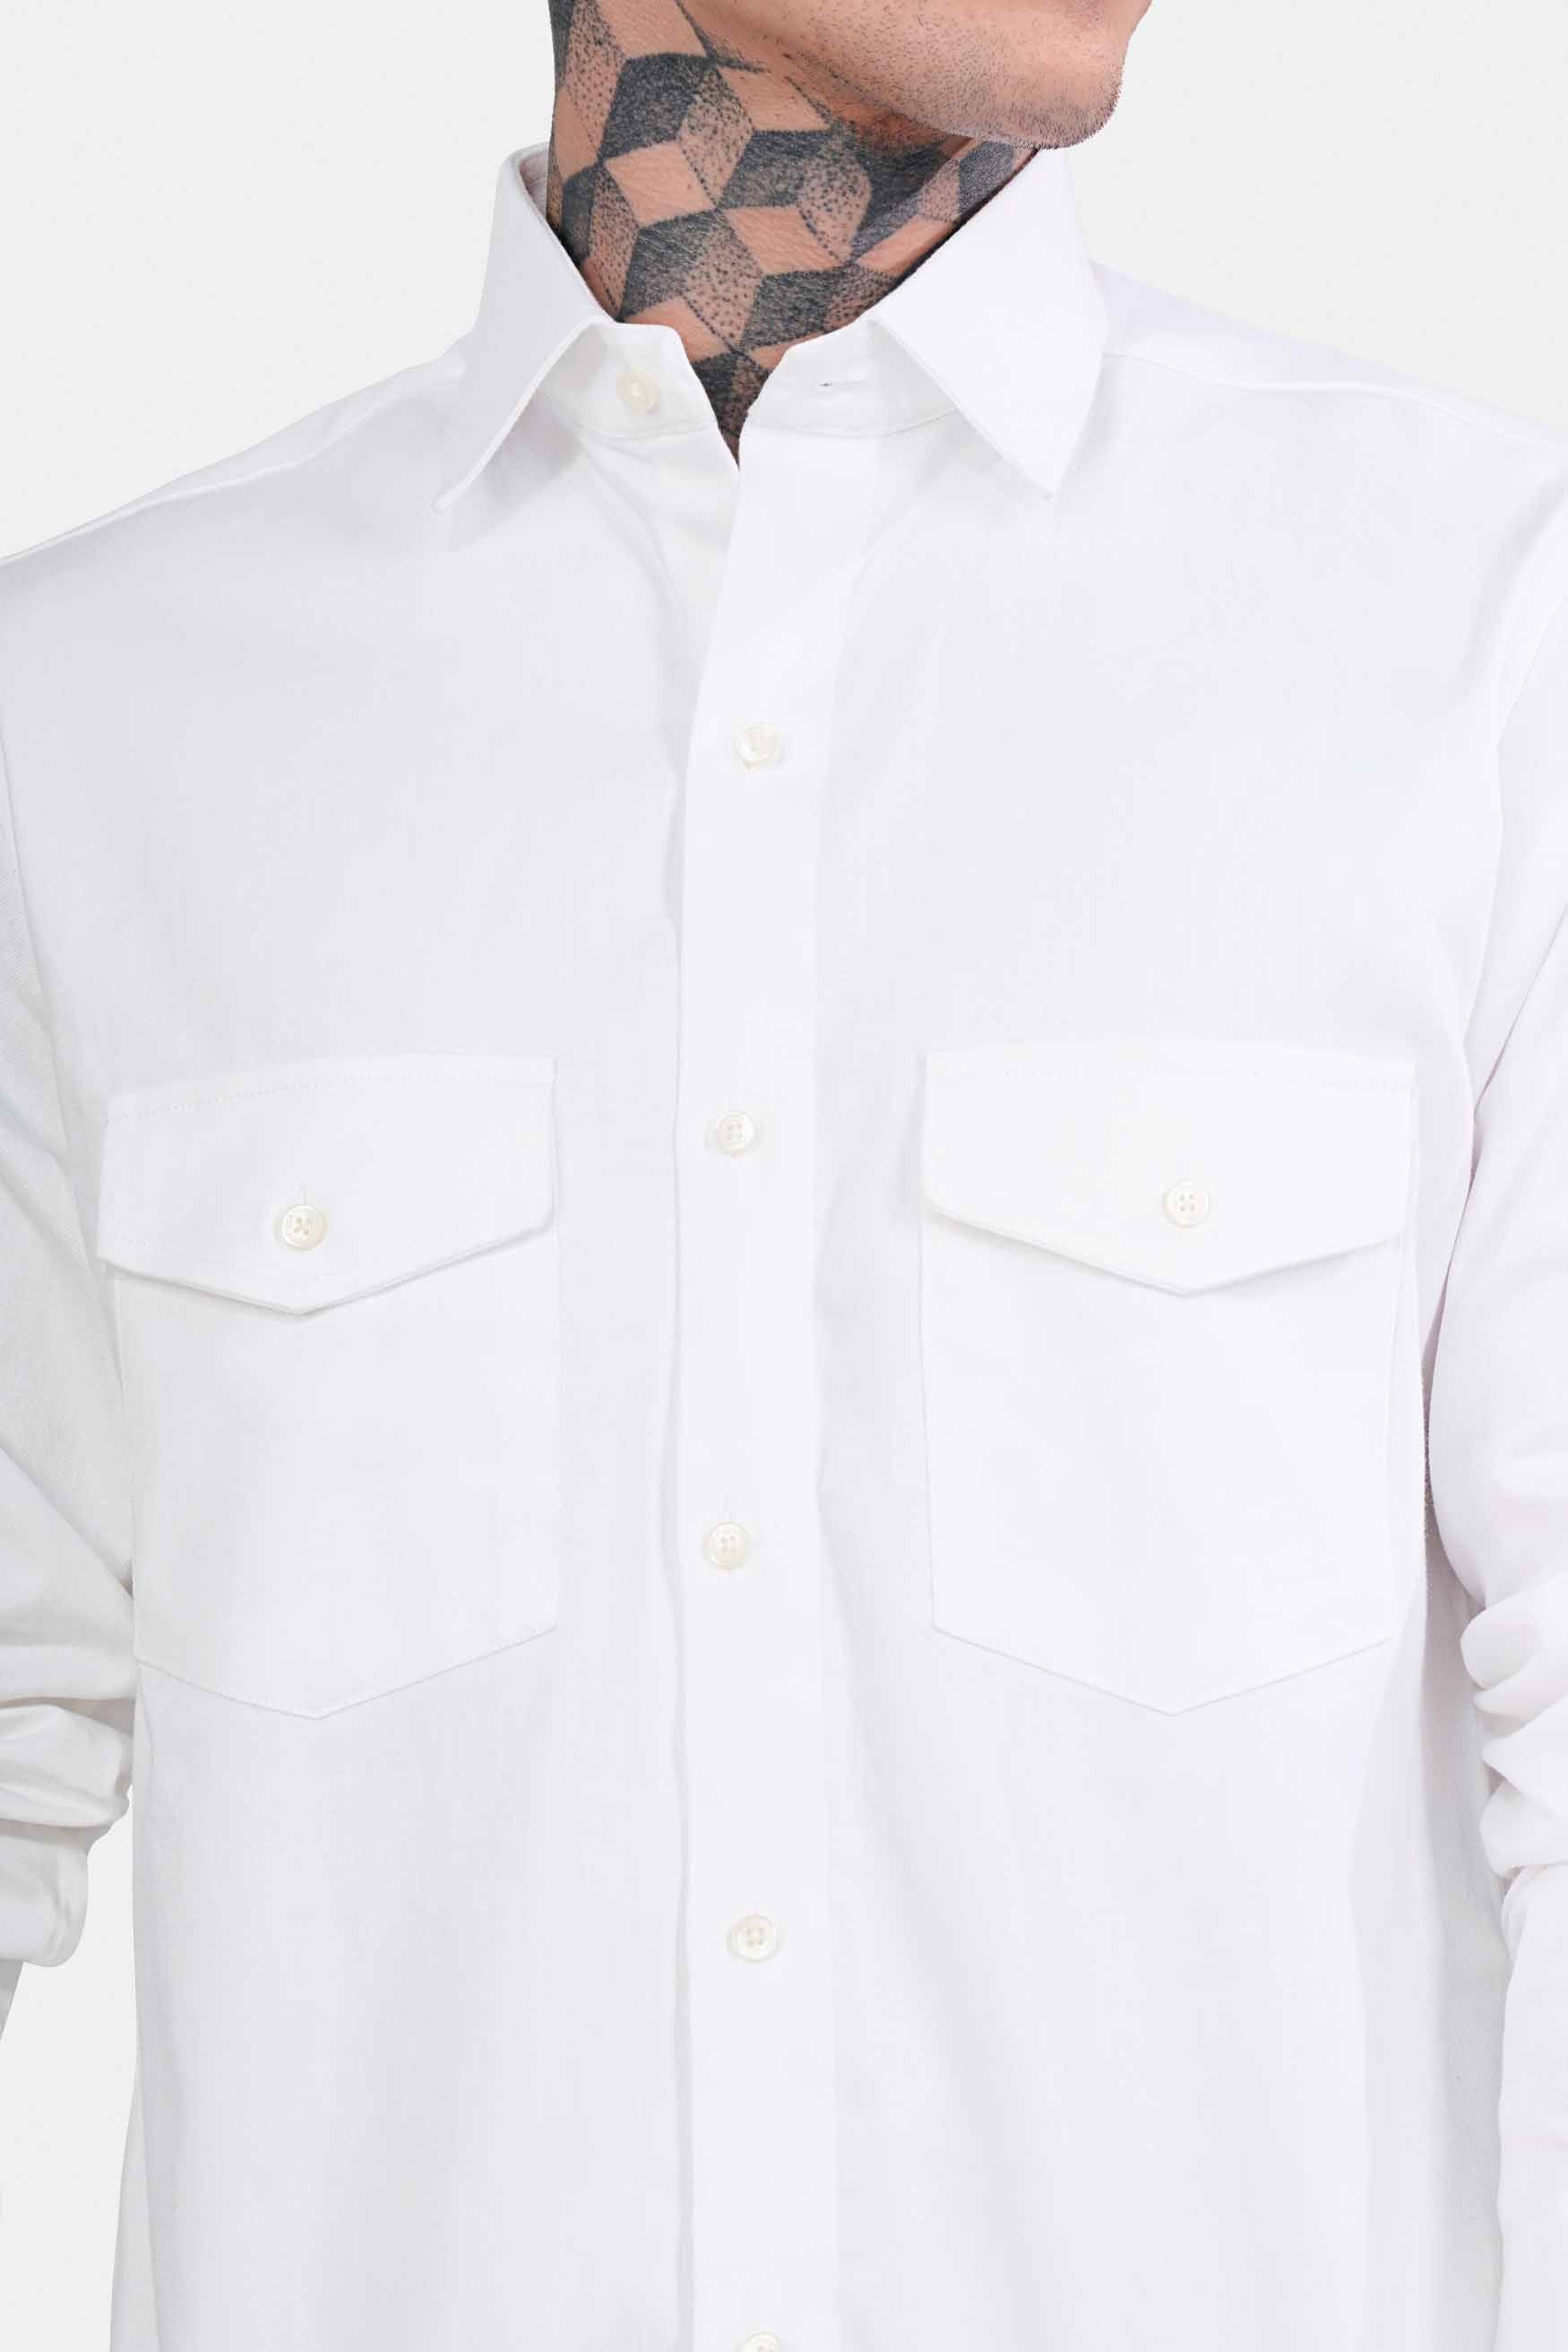 Bright White Royal Oxford Designer Overshirt